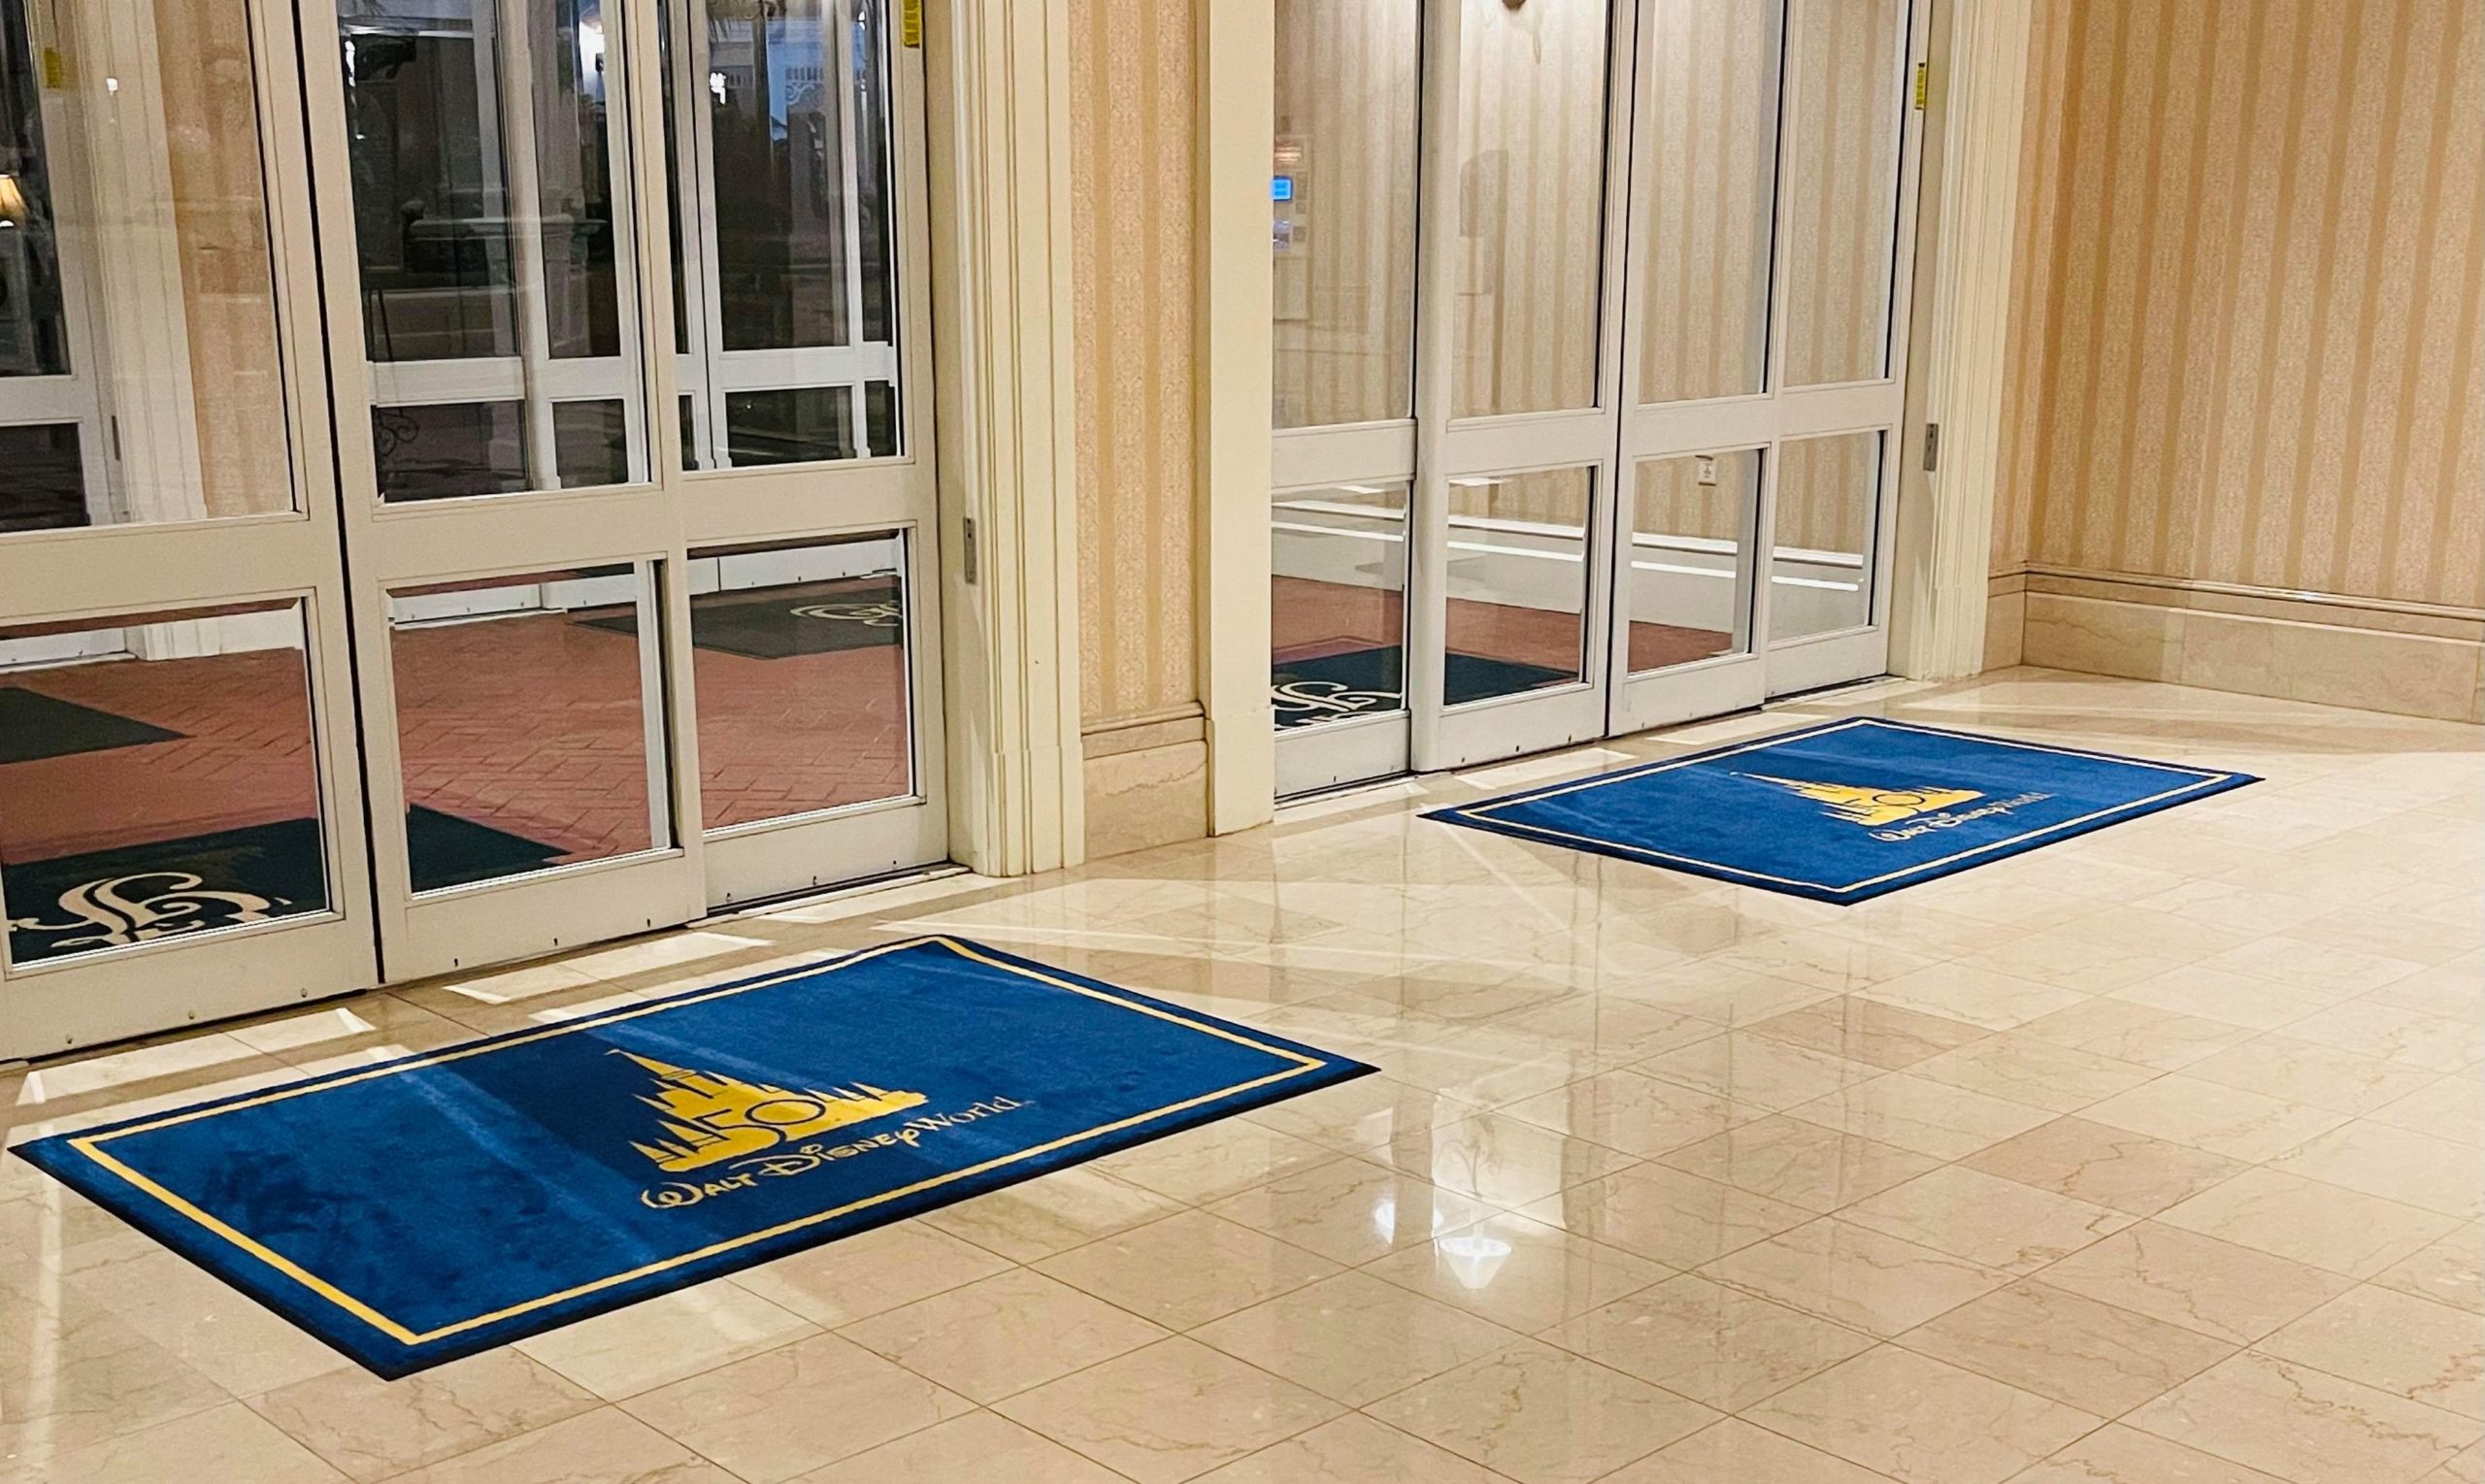 Welcome mat star wars entrance hall rug